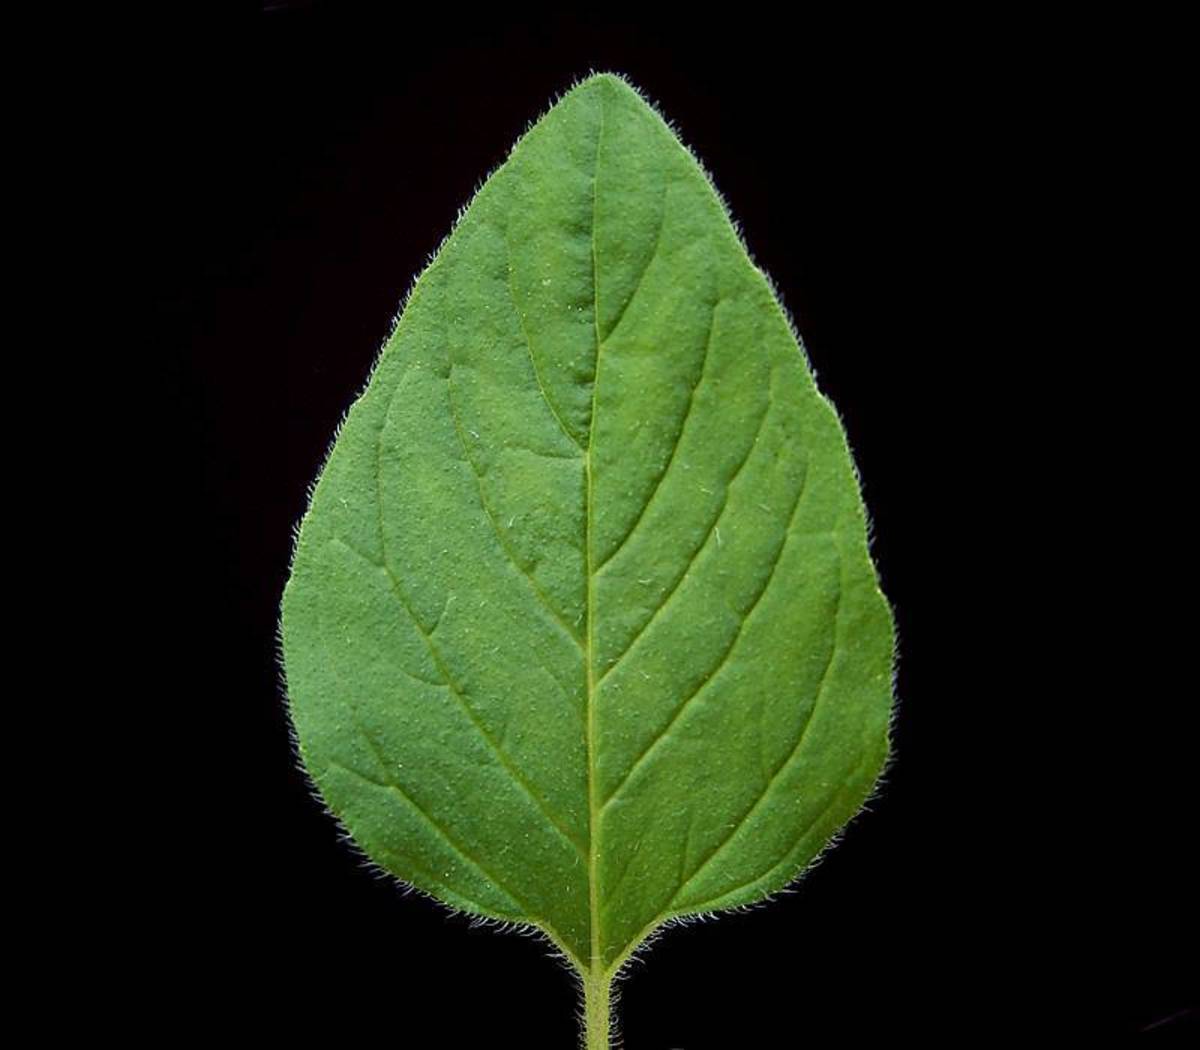 Oregano Leaf